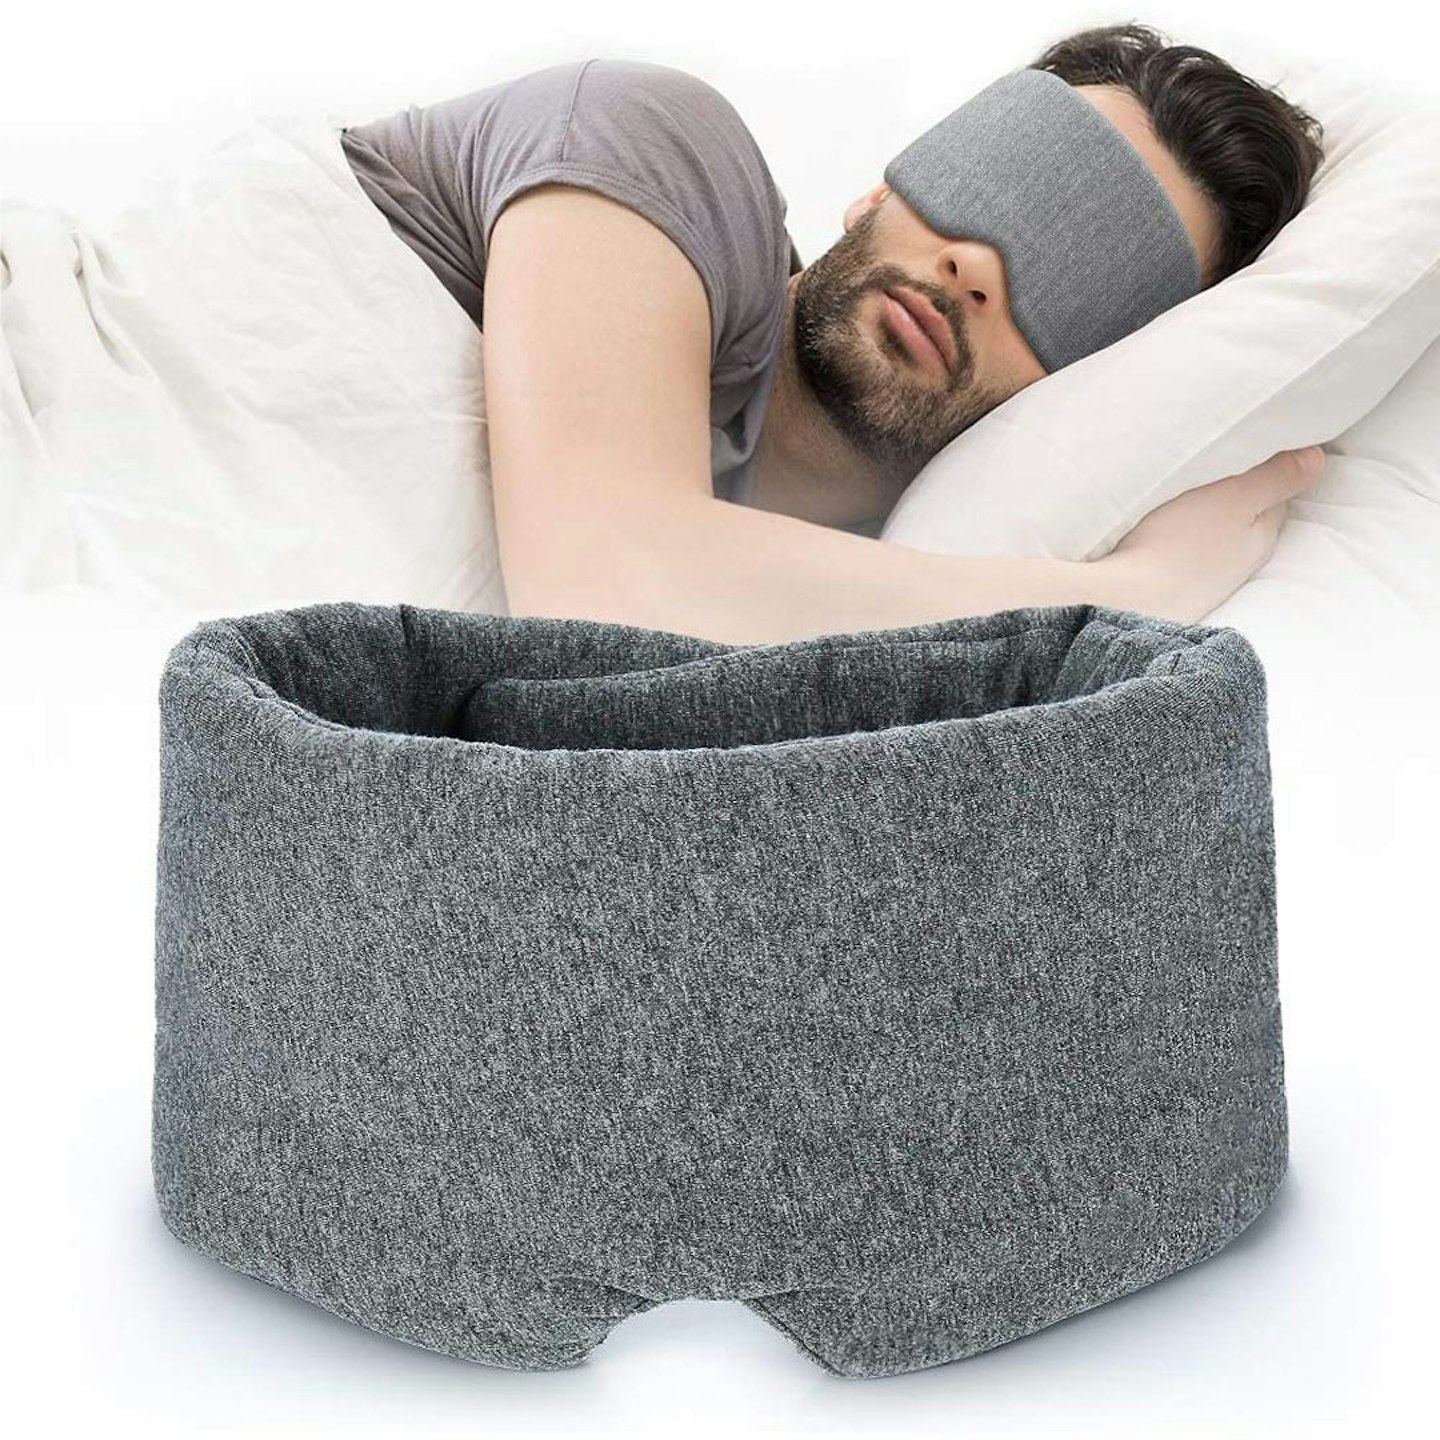 Best sleep mask: 100% Handmade Cotton Sleep Mask Blackout